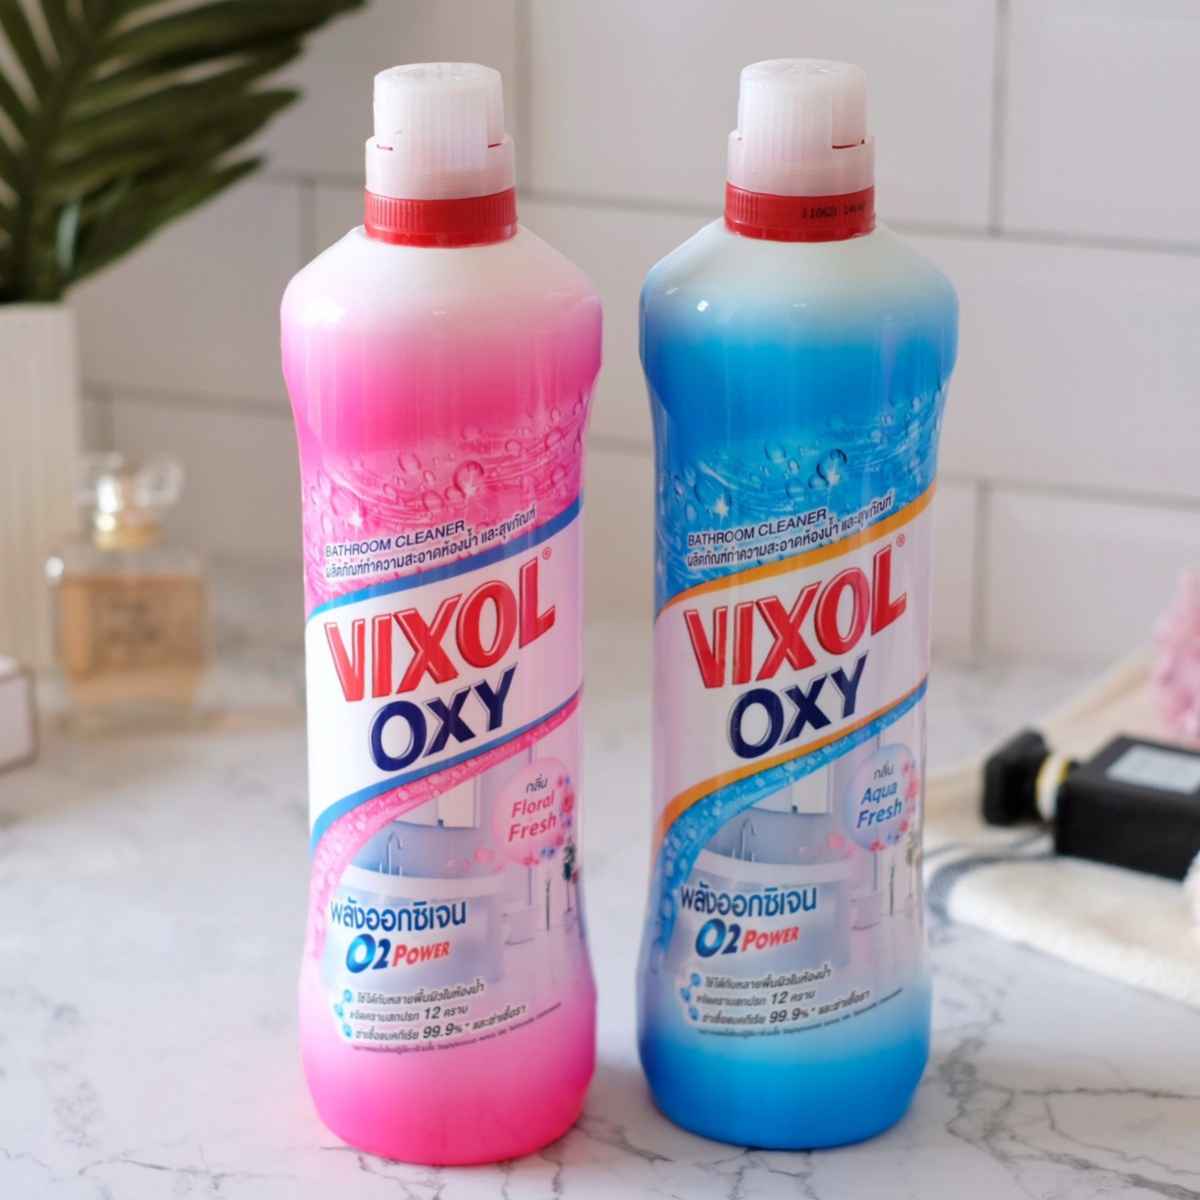 Vixol Oxy